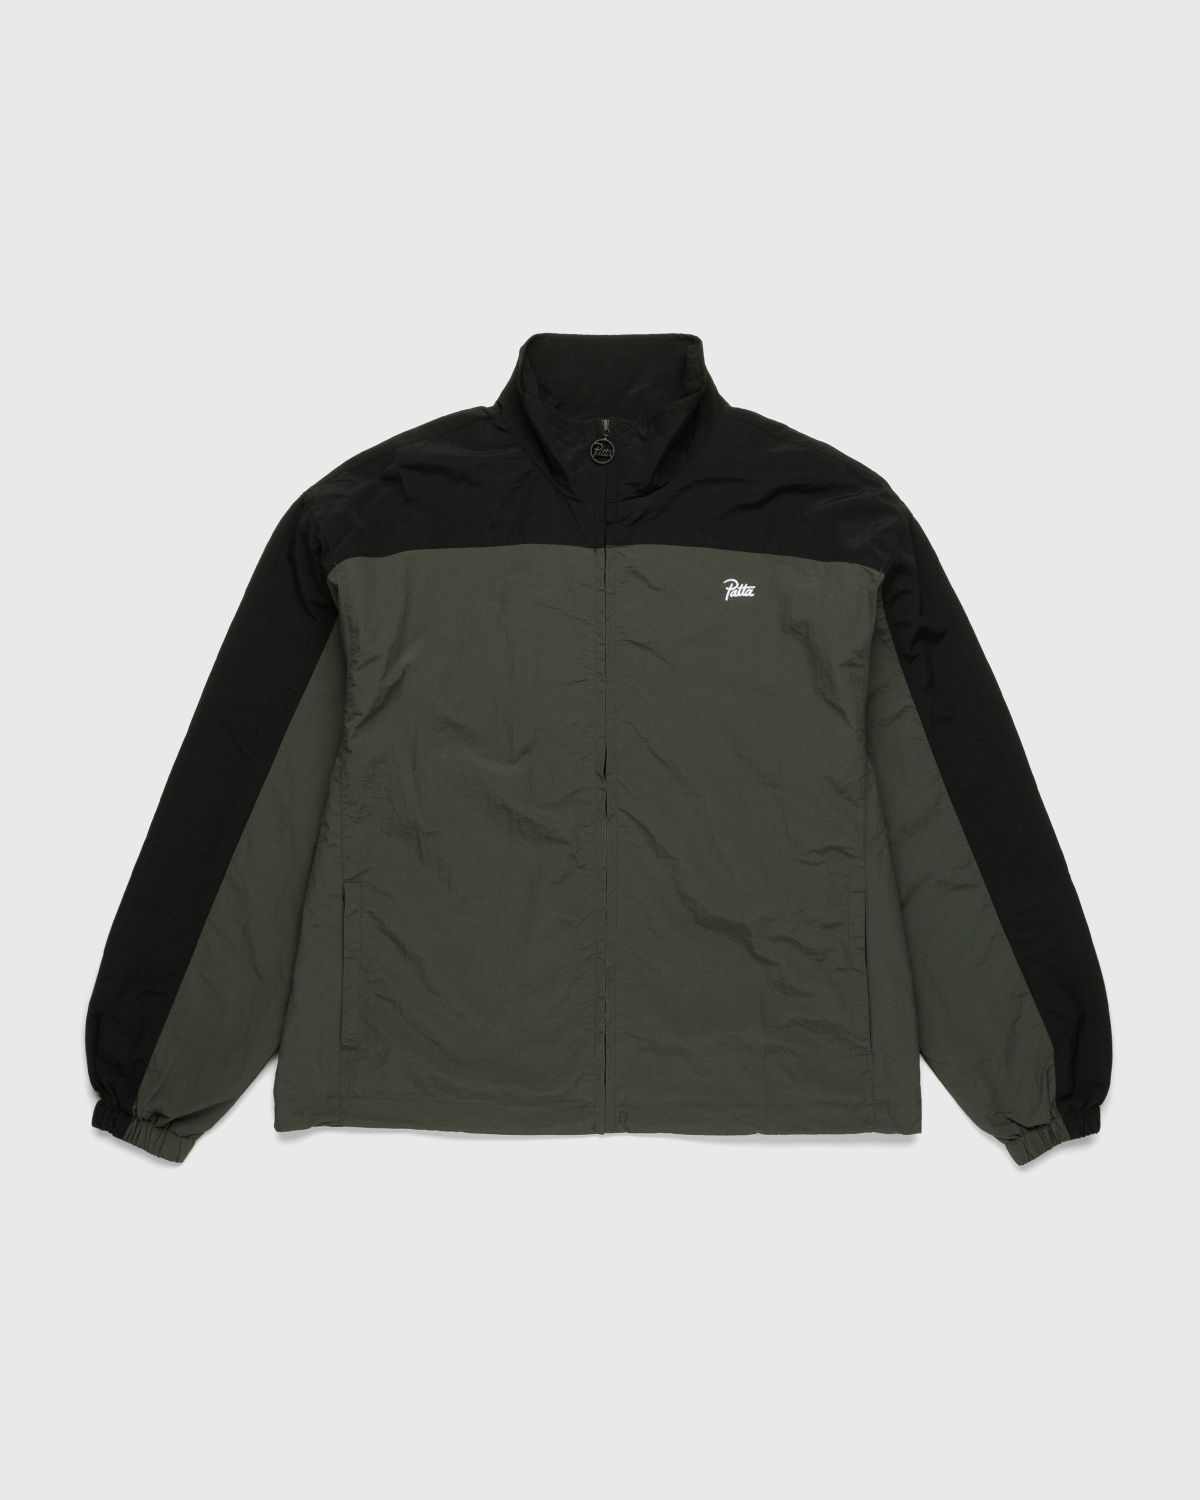 Patta – Athletic Track Jacket Black/Charcoal Grey